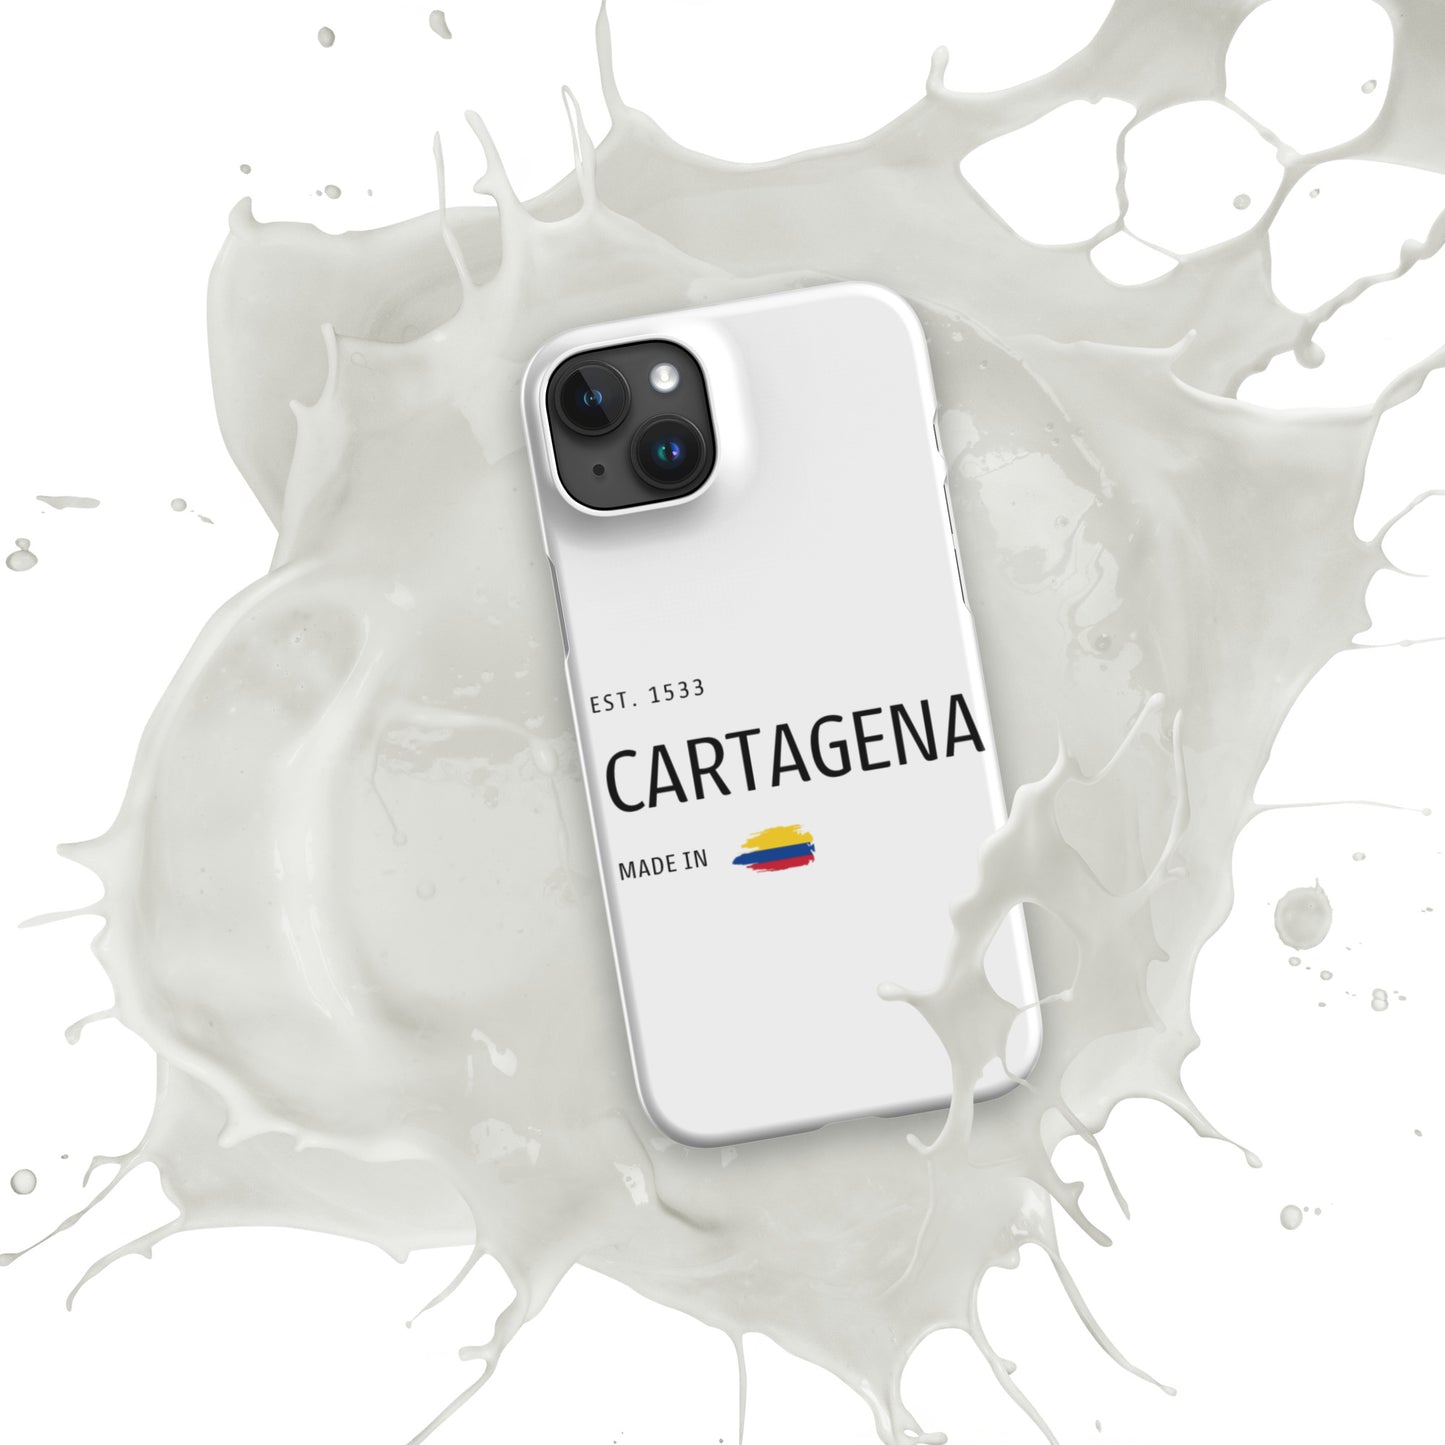 Made in Cartagena iPhone Case